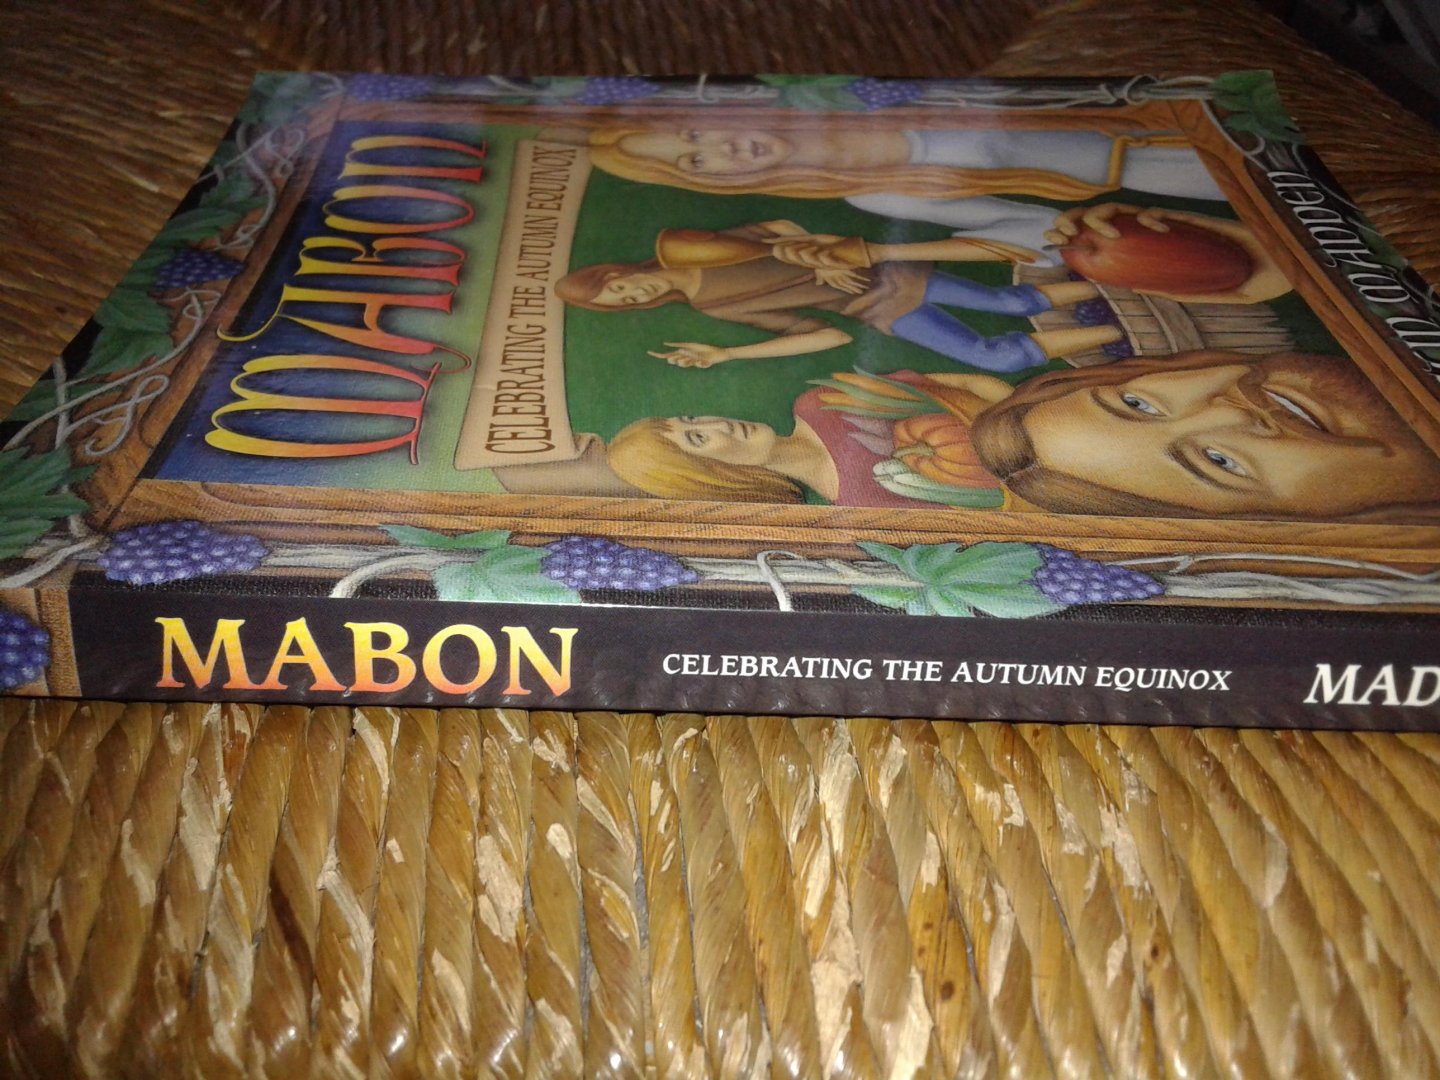 Madden K - Mabon: Celebrating the Autumn Equinox